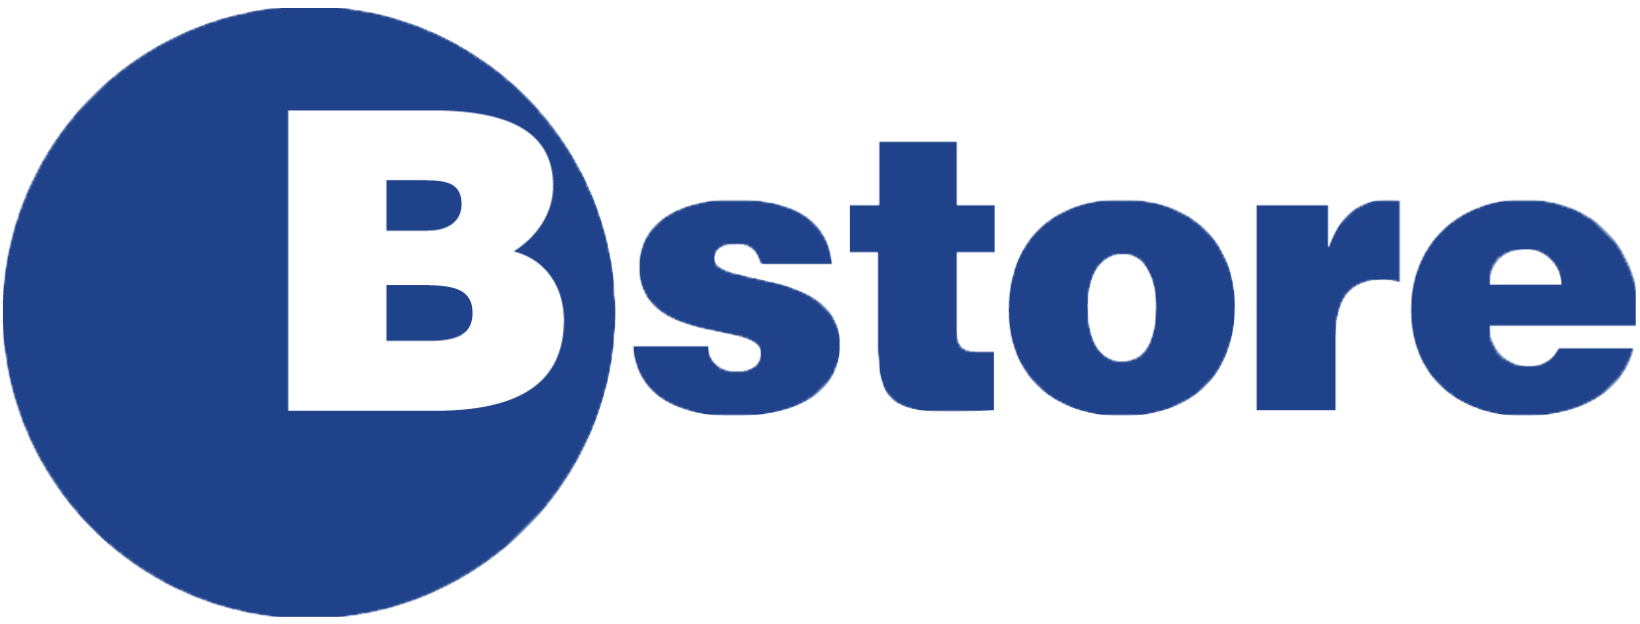 Bstore logo